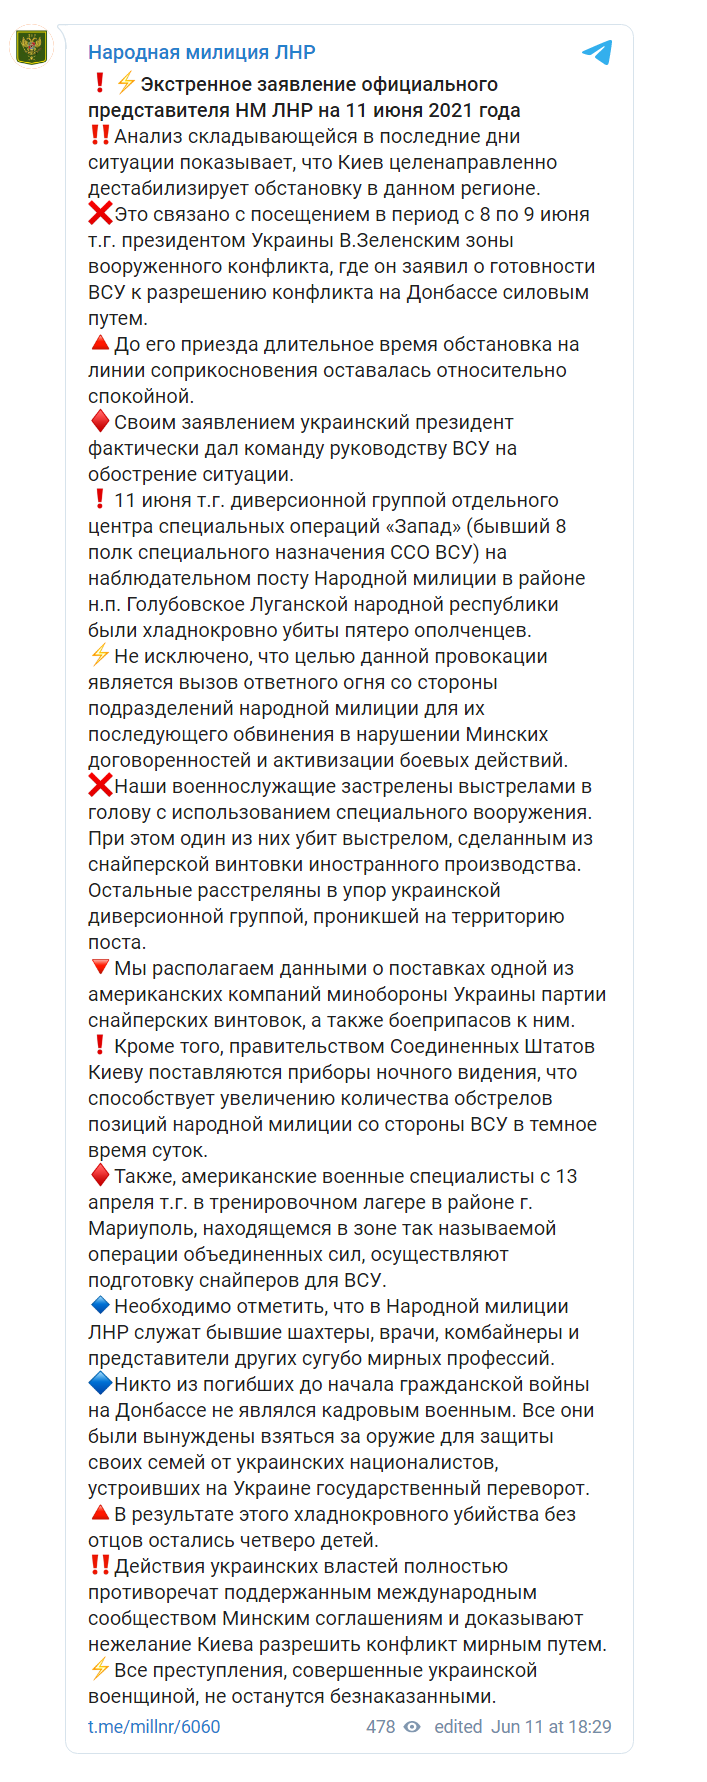 Скриншот из Телеграма Народной милиции ЛНР